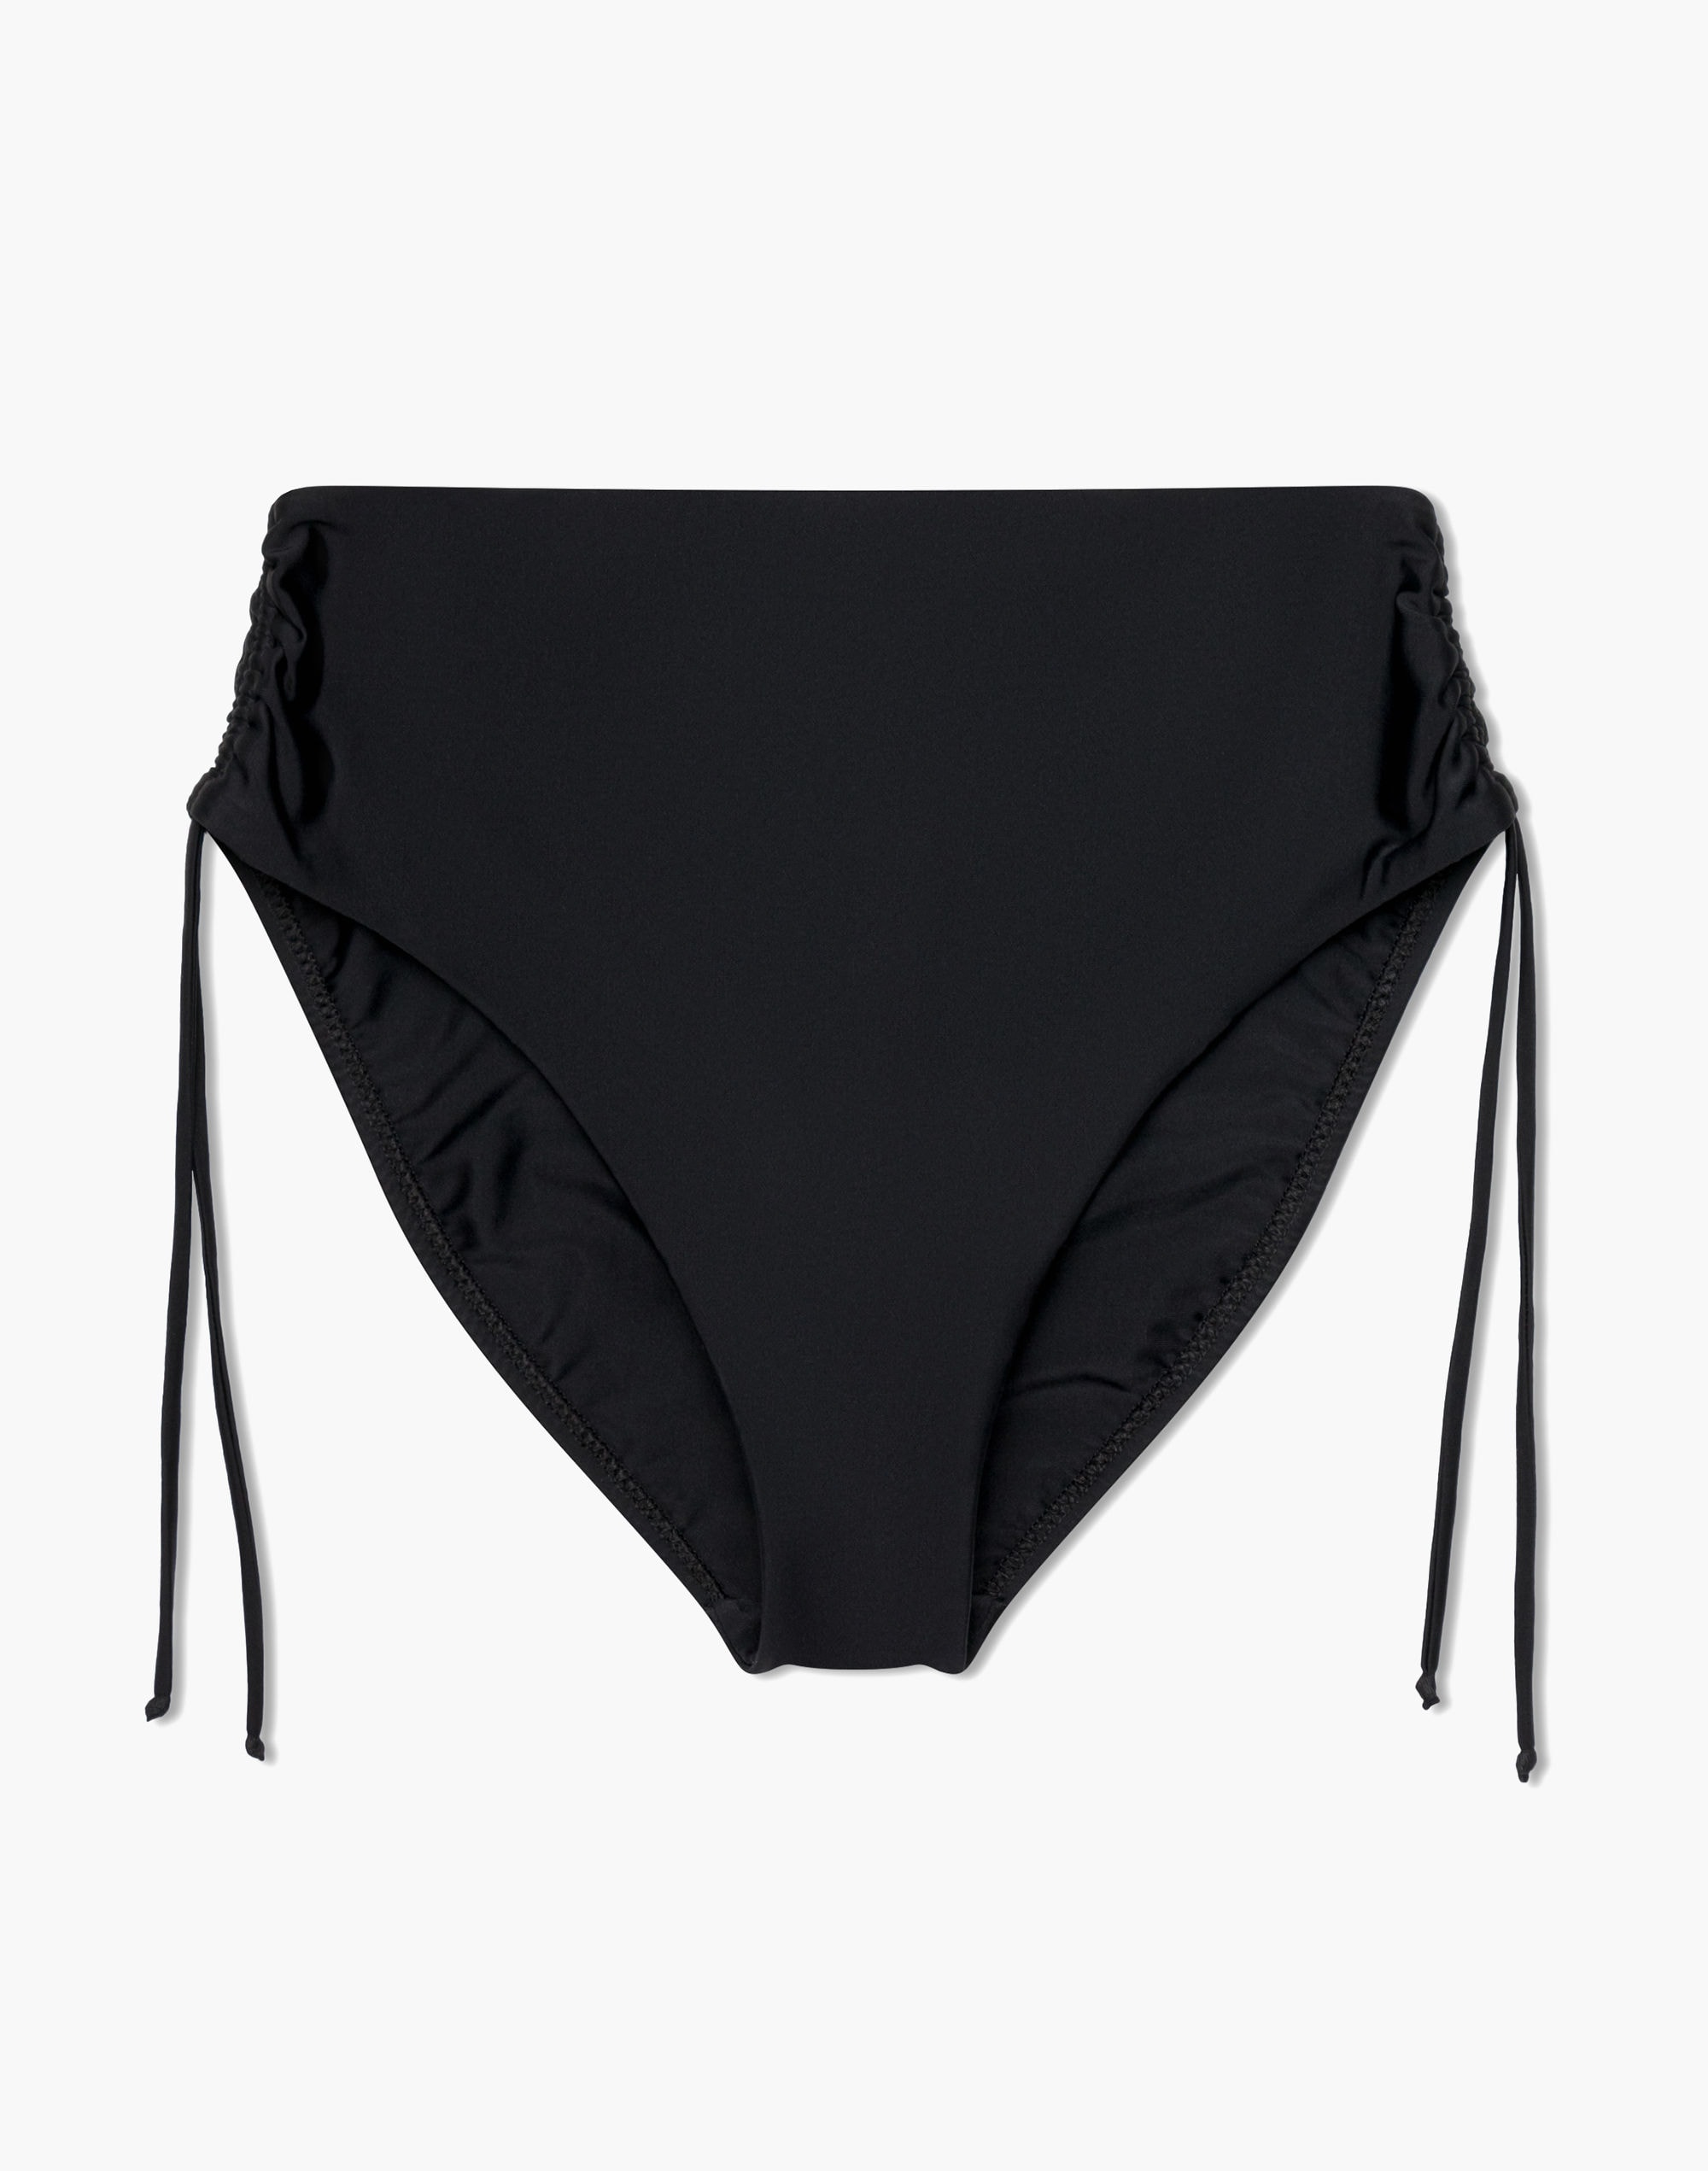 GALAMAAR® Ruched High-Waist Bikini Bottom